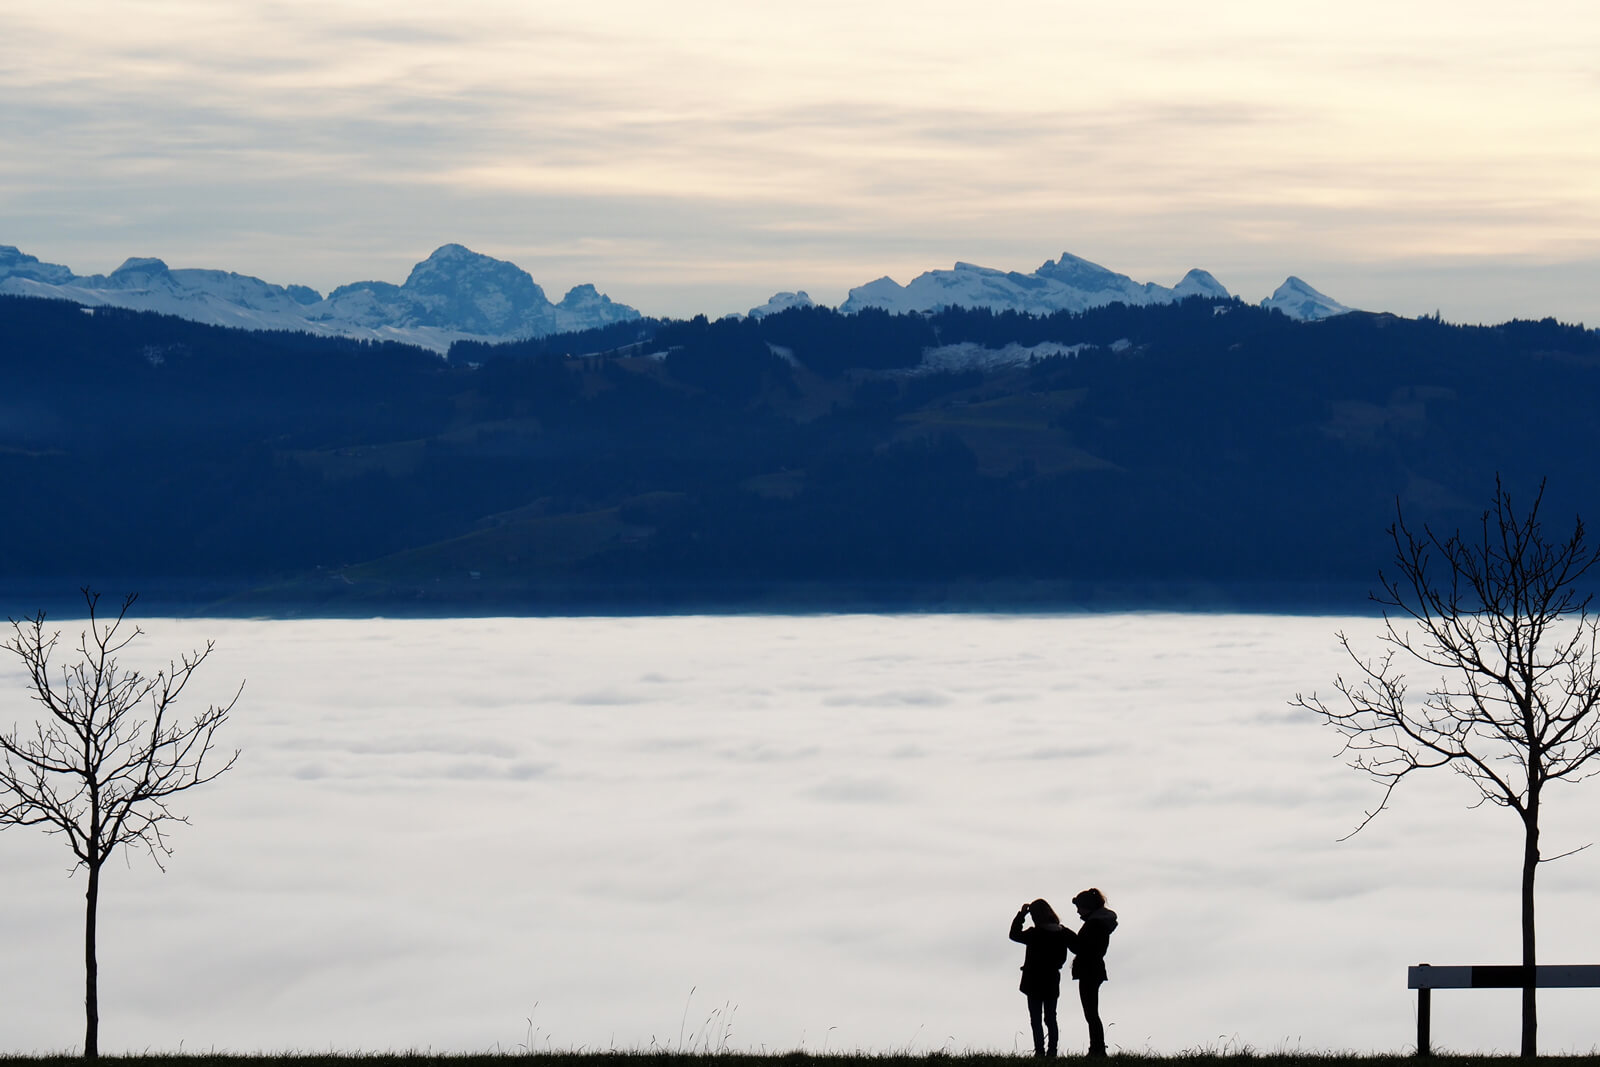 Nebelmeer at Hasenstrick - Sea of Fog aboove Switzerland